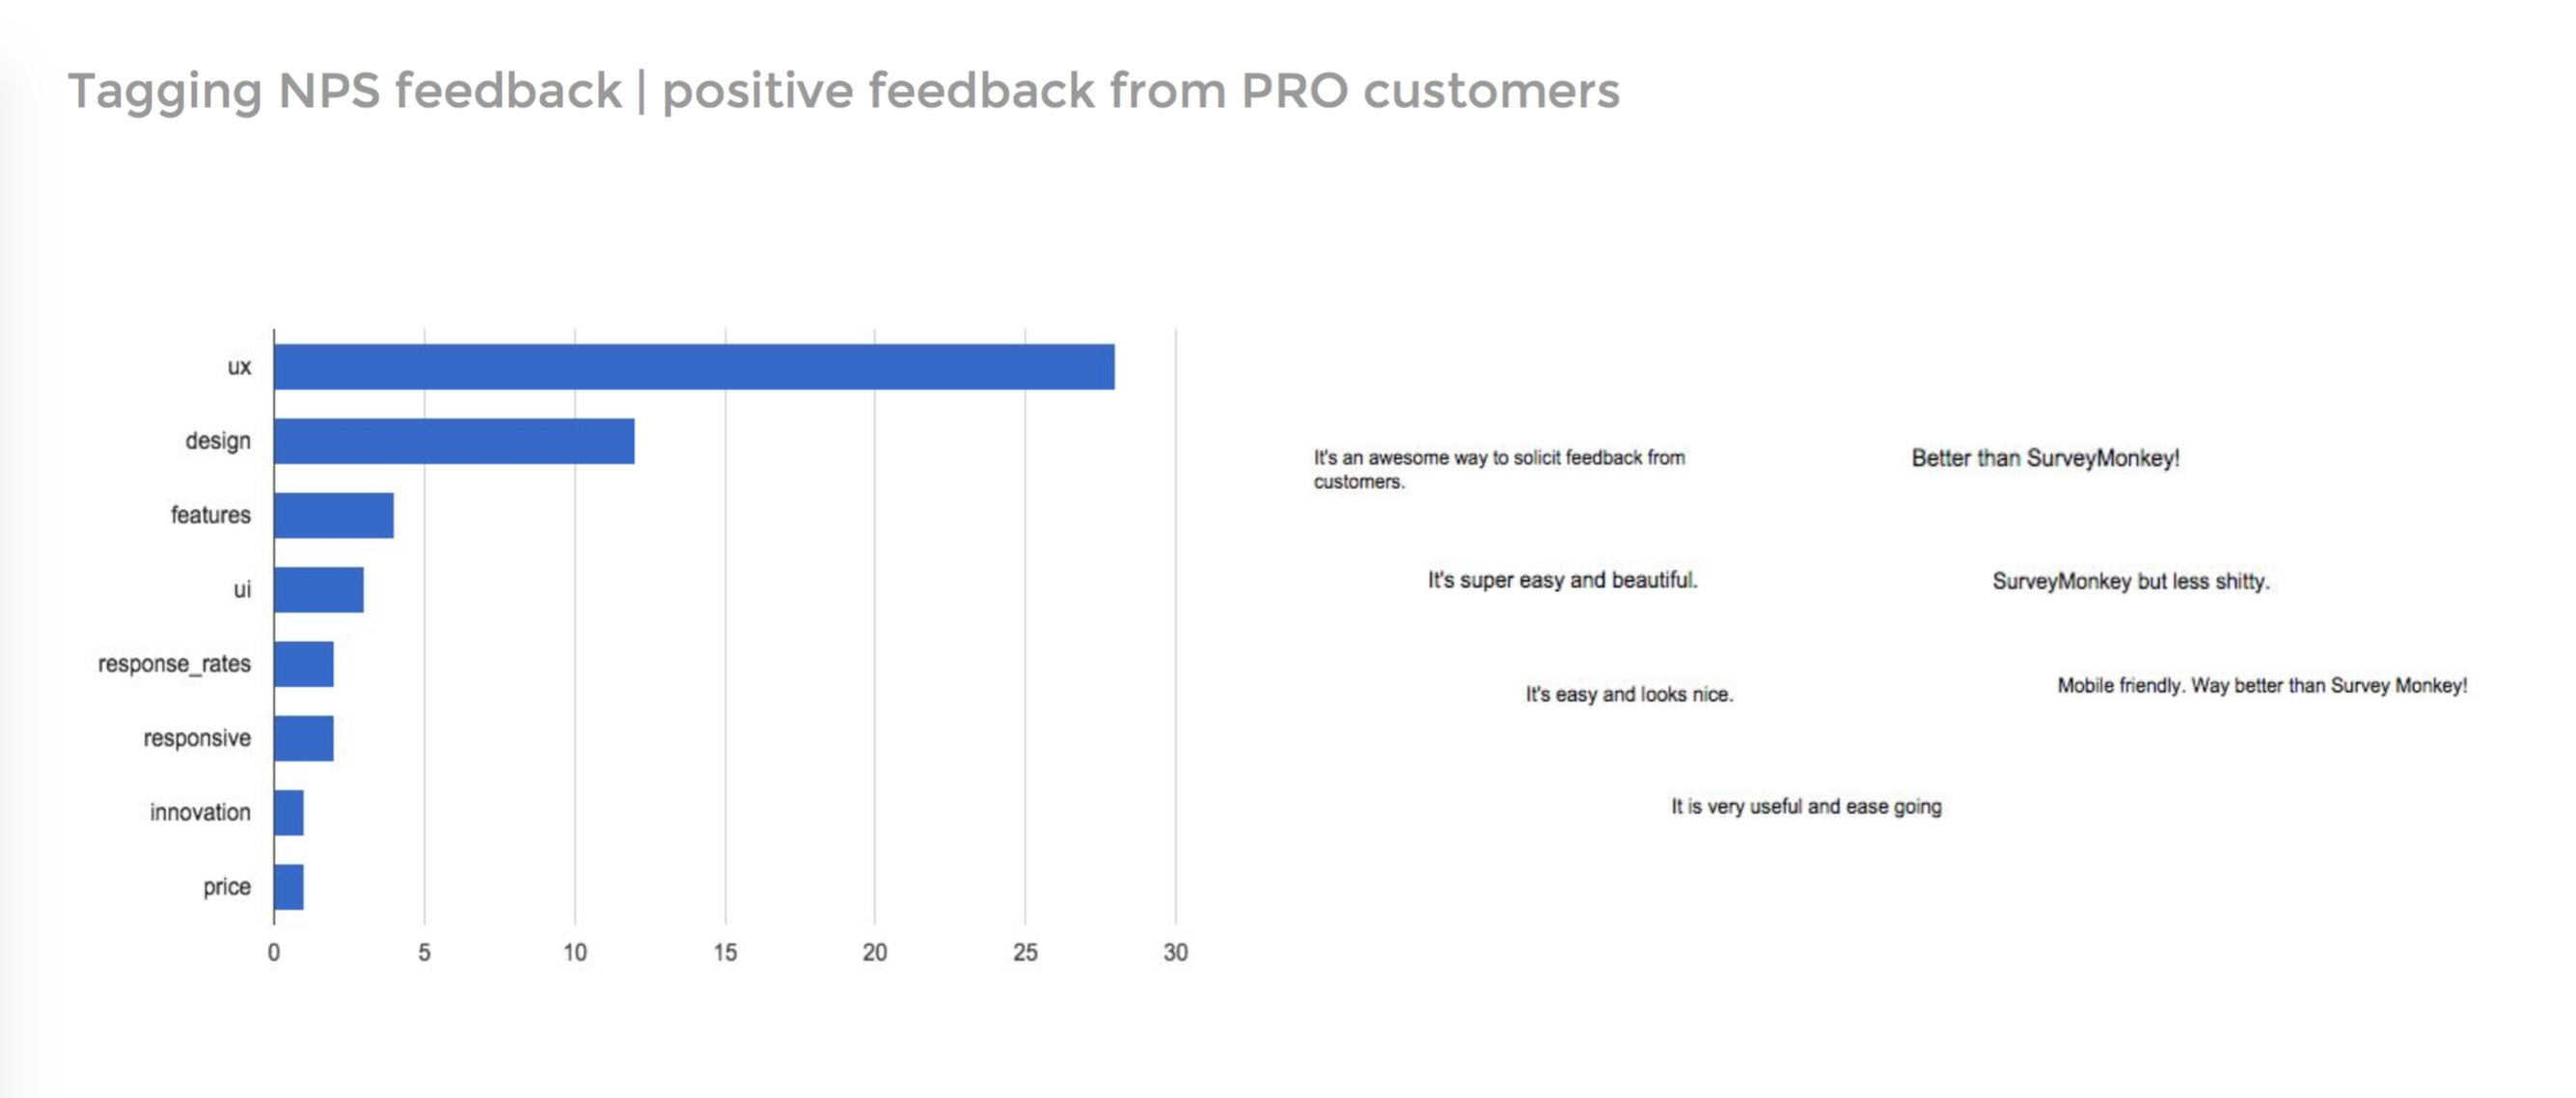 Tagging NPS feedback | positive feedback from PRO customers